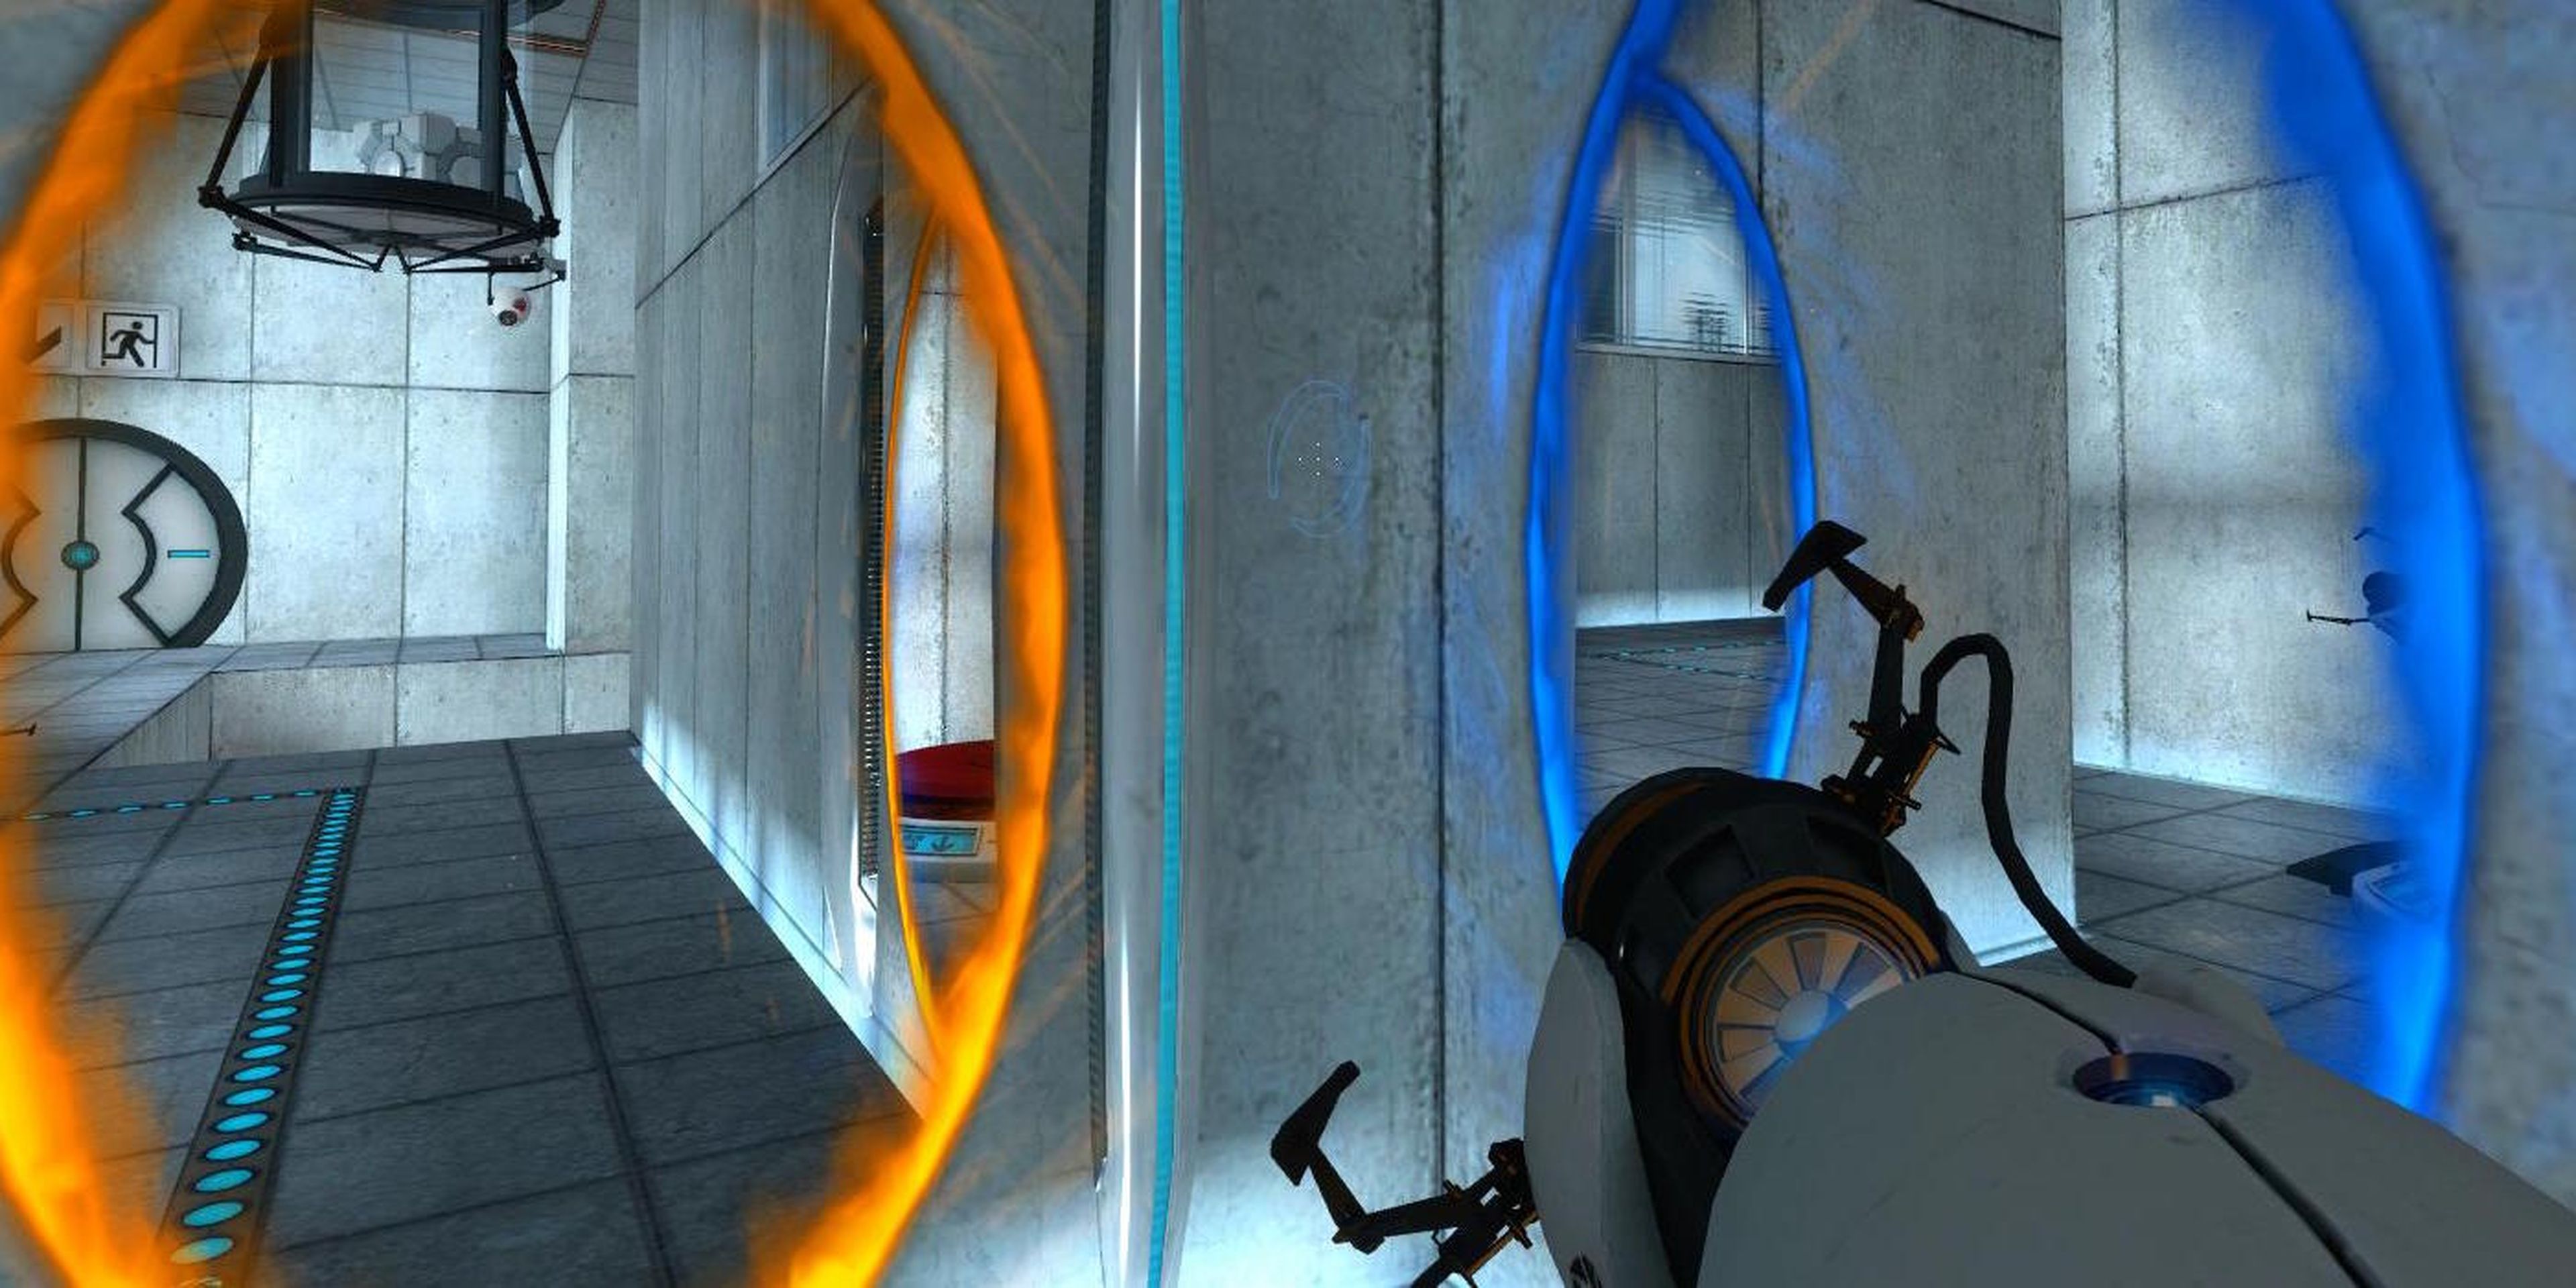 Б г портал. Игра Portal 2. Портал 2 порталы. Портал 1 в half-Life 2. Портал из халф лайф 2.